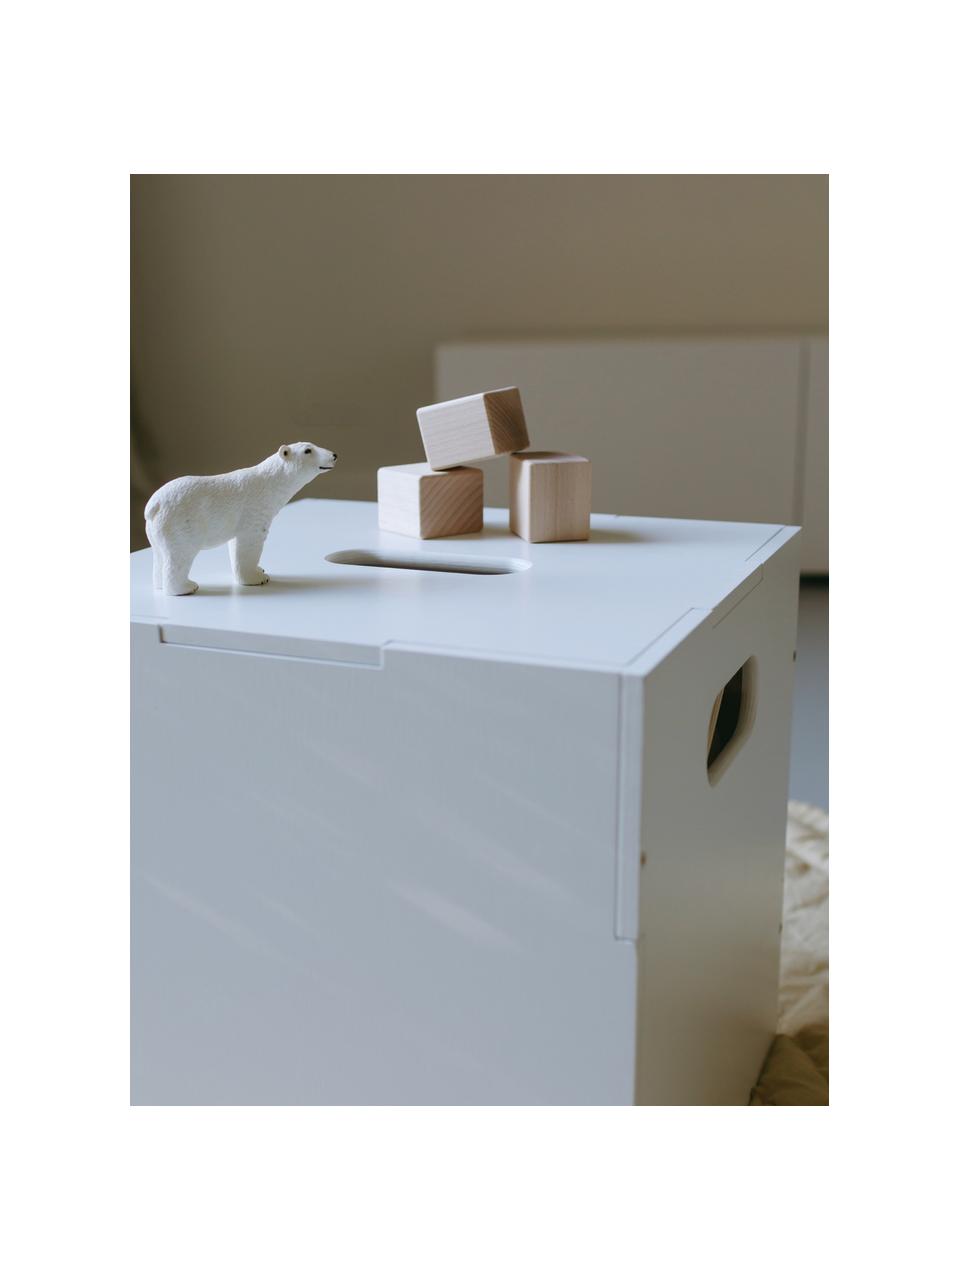 Holz-Aufbewahrungsbox Cube, Birkenholzfurnier, lackiert

Dieses Produkt wird aus nachhaltig gewonnenem, FSC®-zertifiziertem Holz gefertigt., Weiss, B 36 x T 36 cm